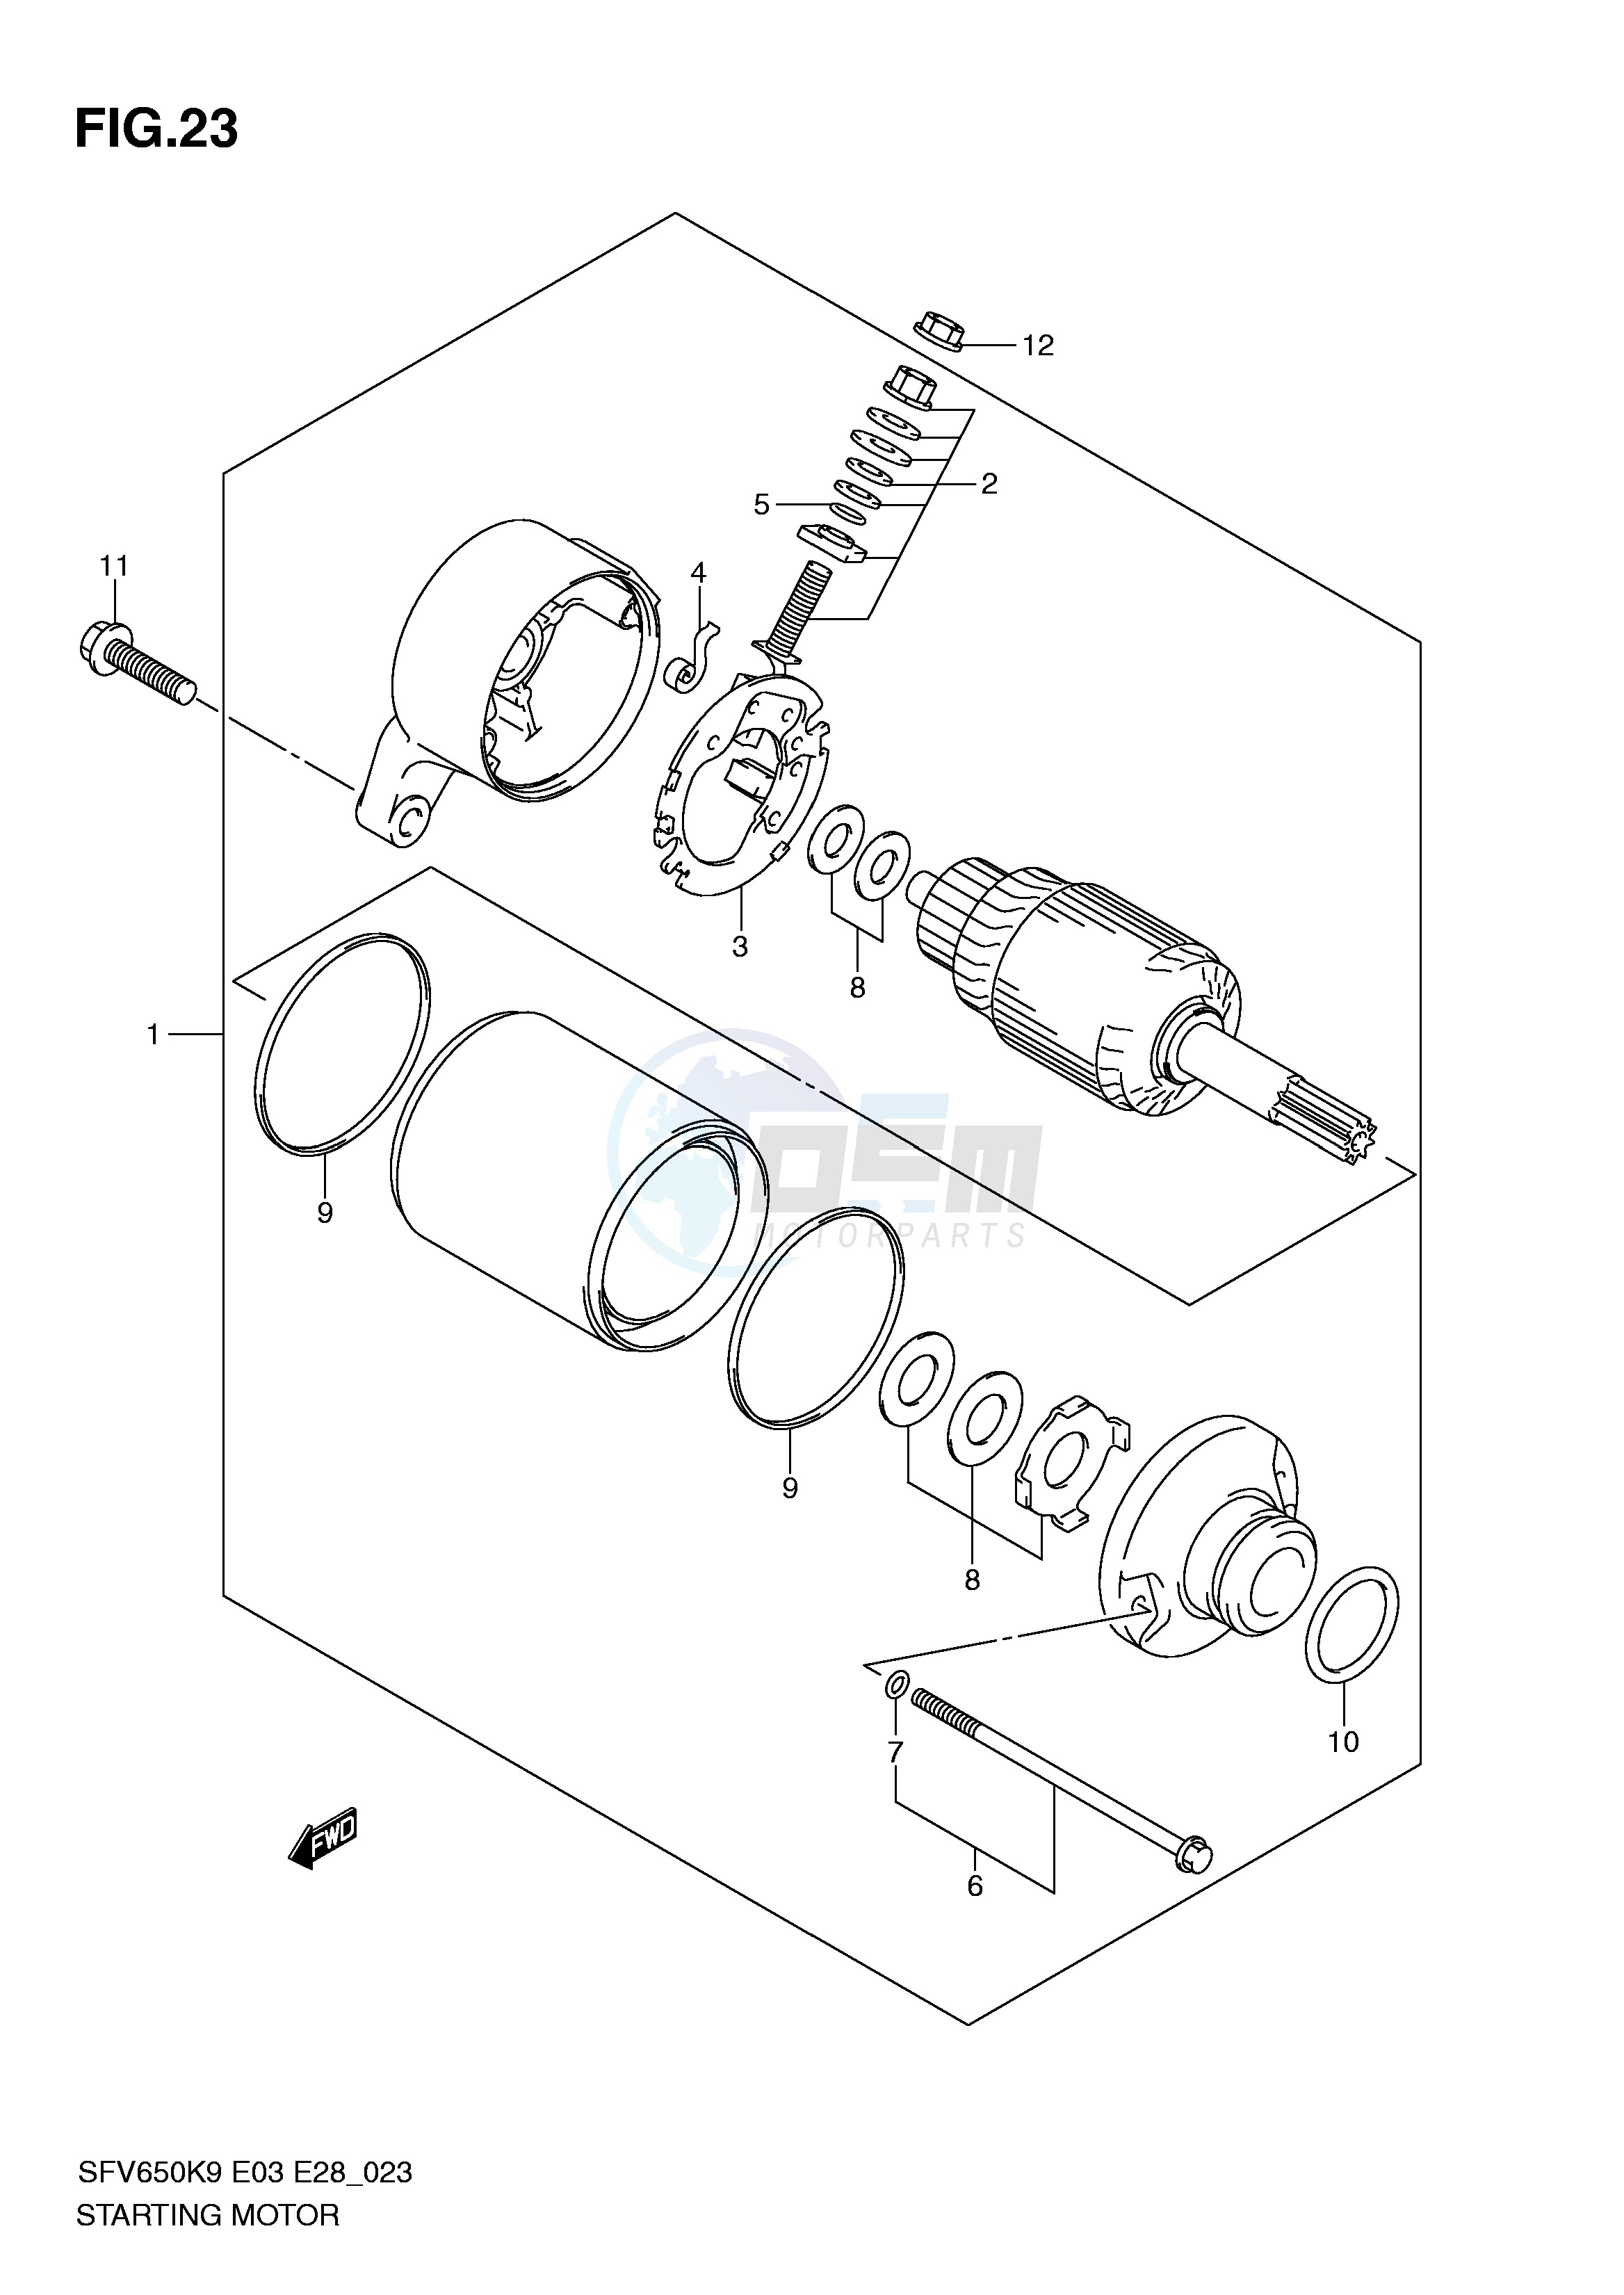 STARTING MOTOR (SFV650K9) blueprint